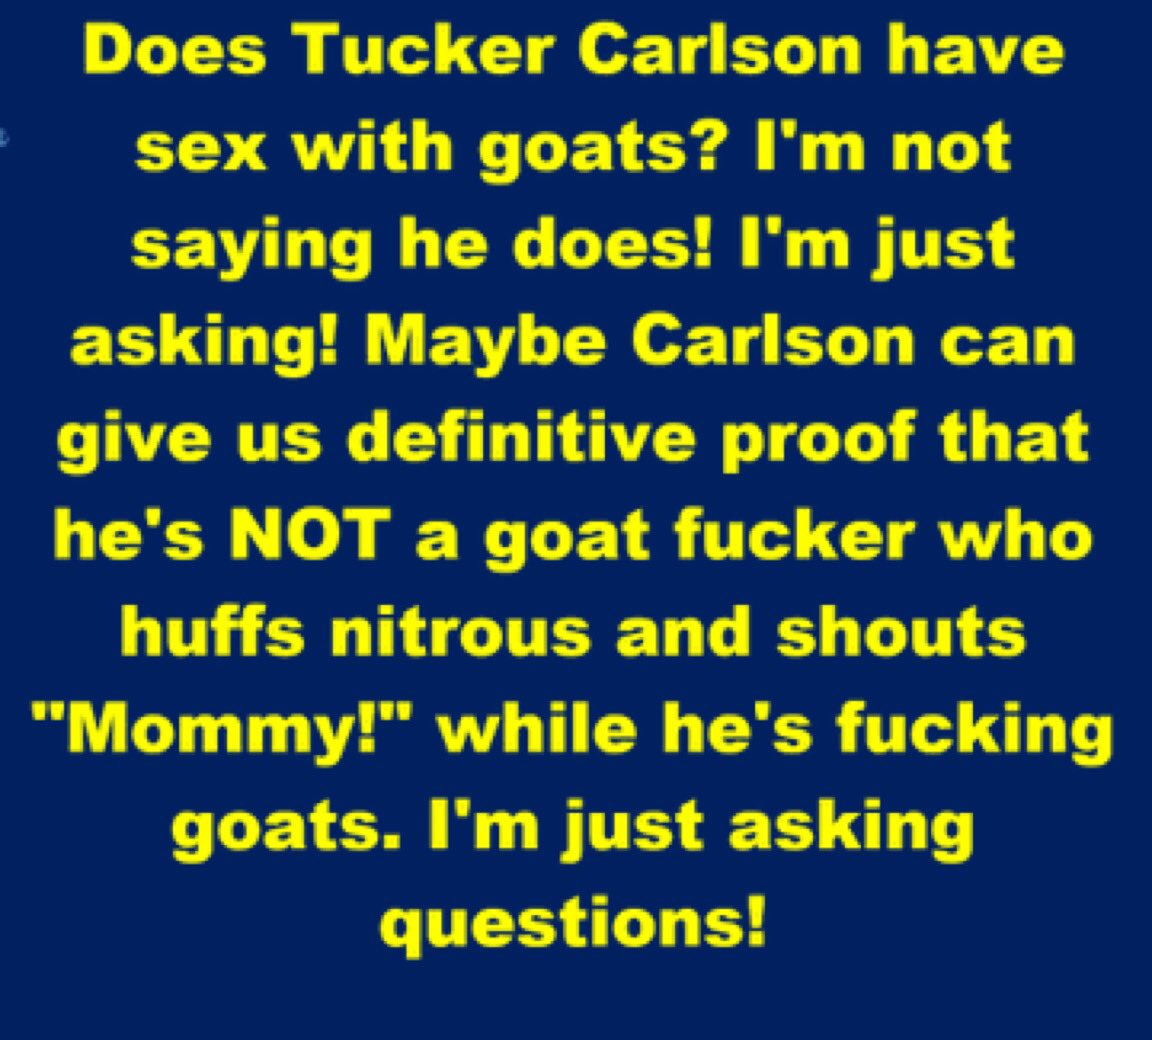 @SundaeDivine @TuckerCarlson @RepMTG What about the goats 🐐 Tucker? 🐐🐐🐐🐐🐐🐐🐐🥕